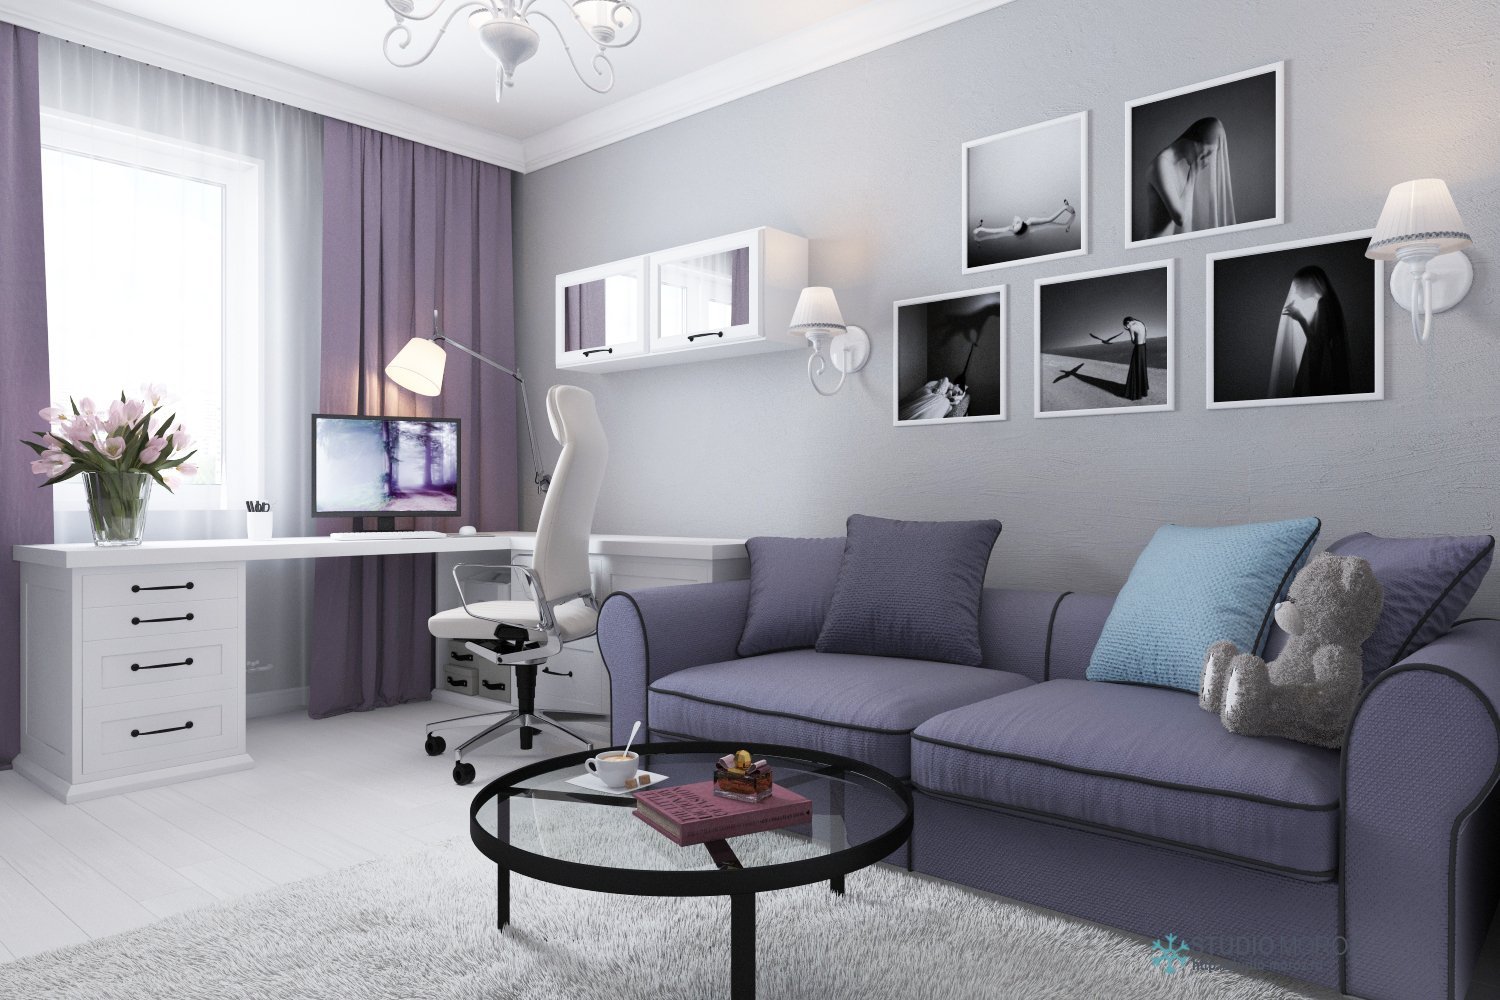 Фиолетовый интерьер комнаты